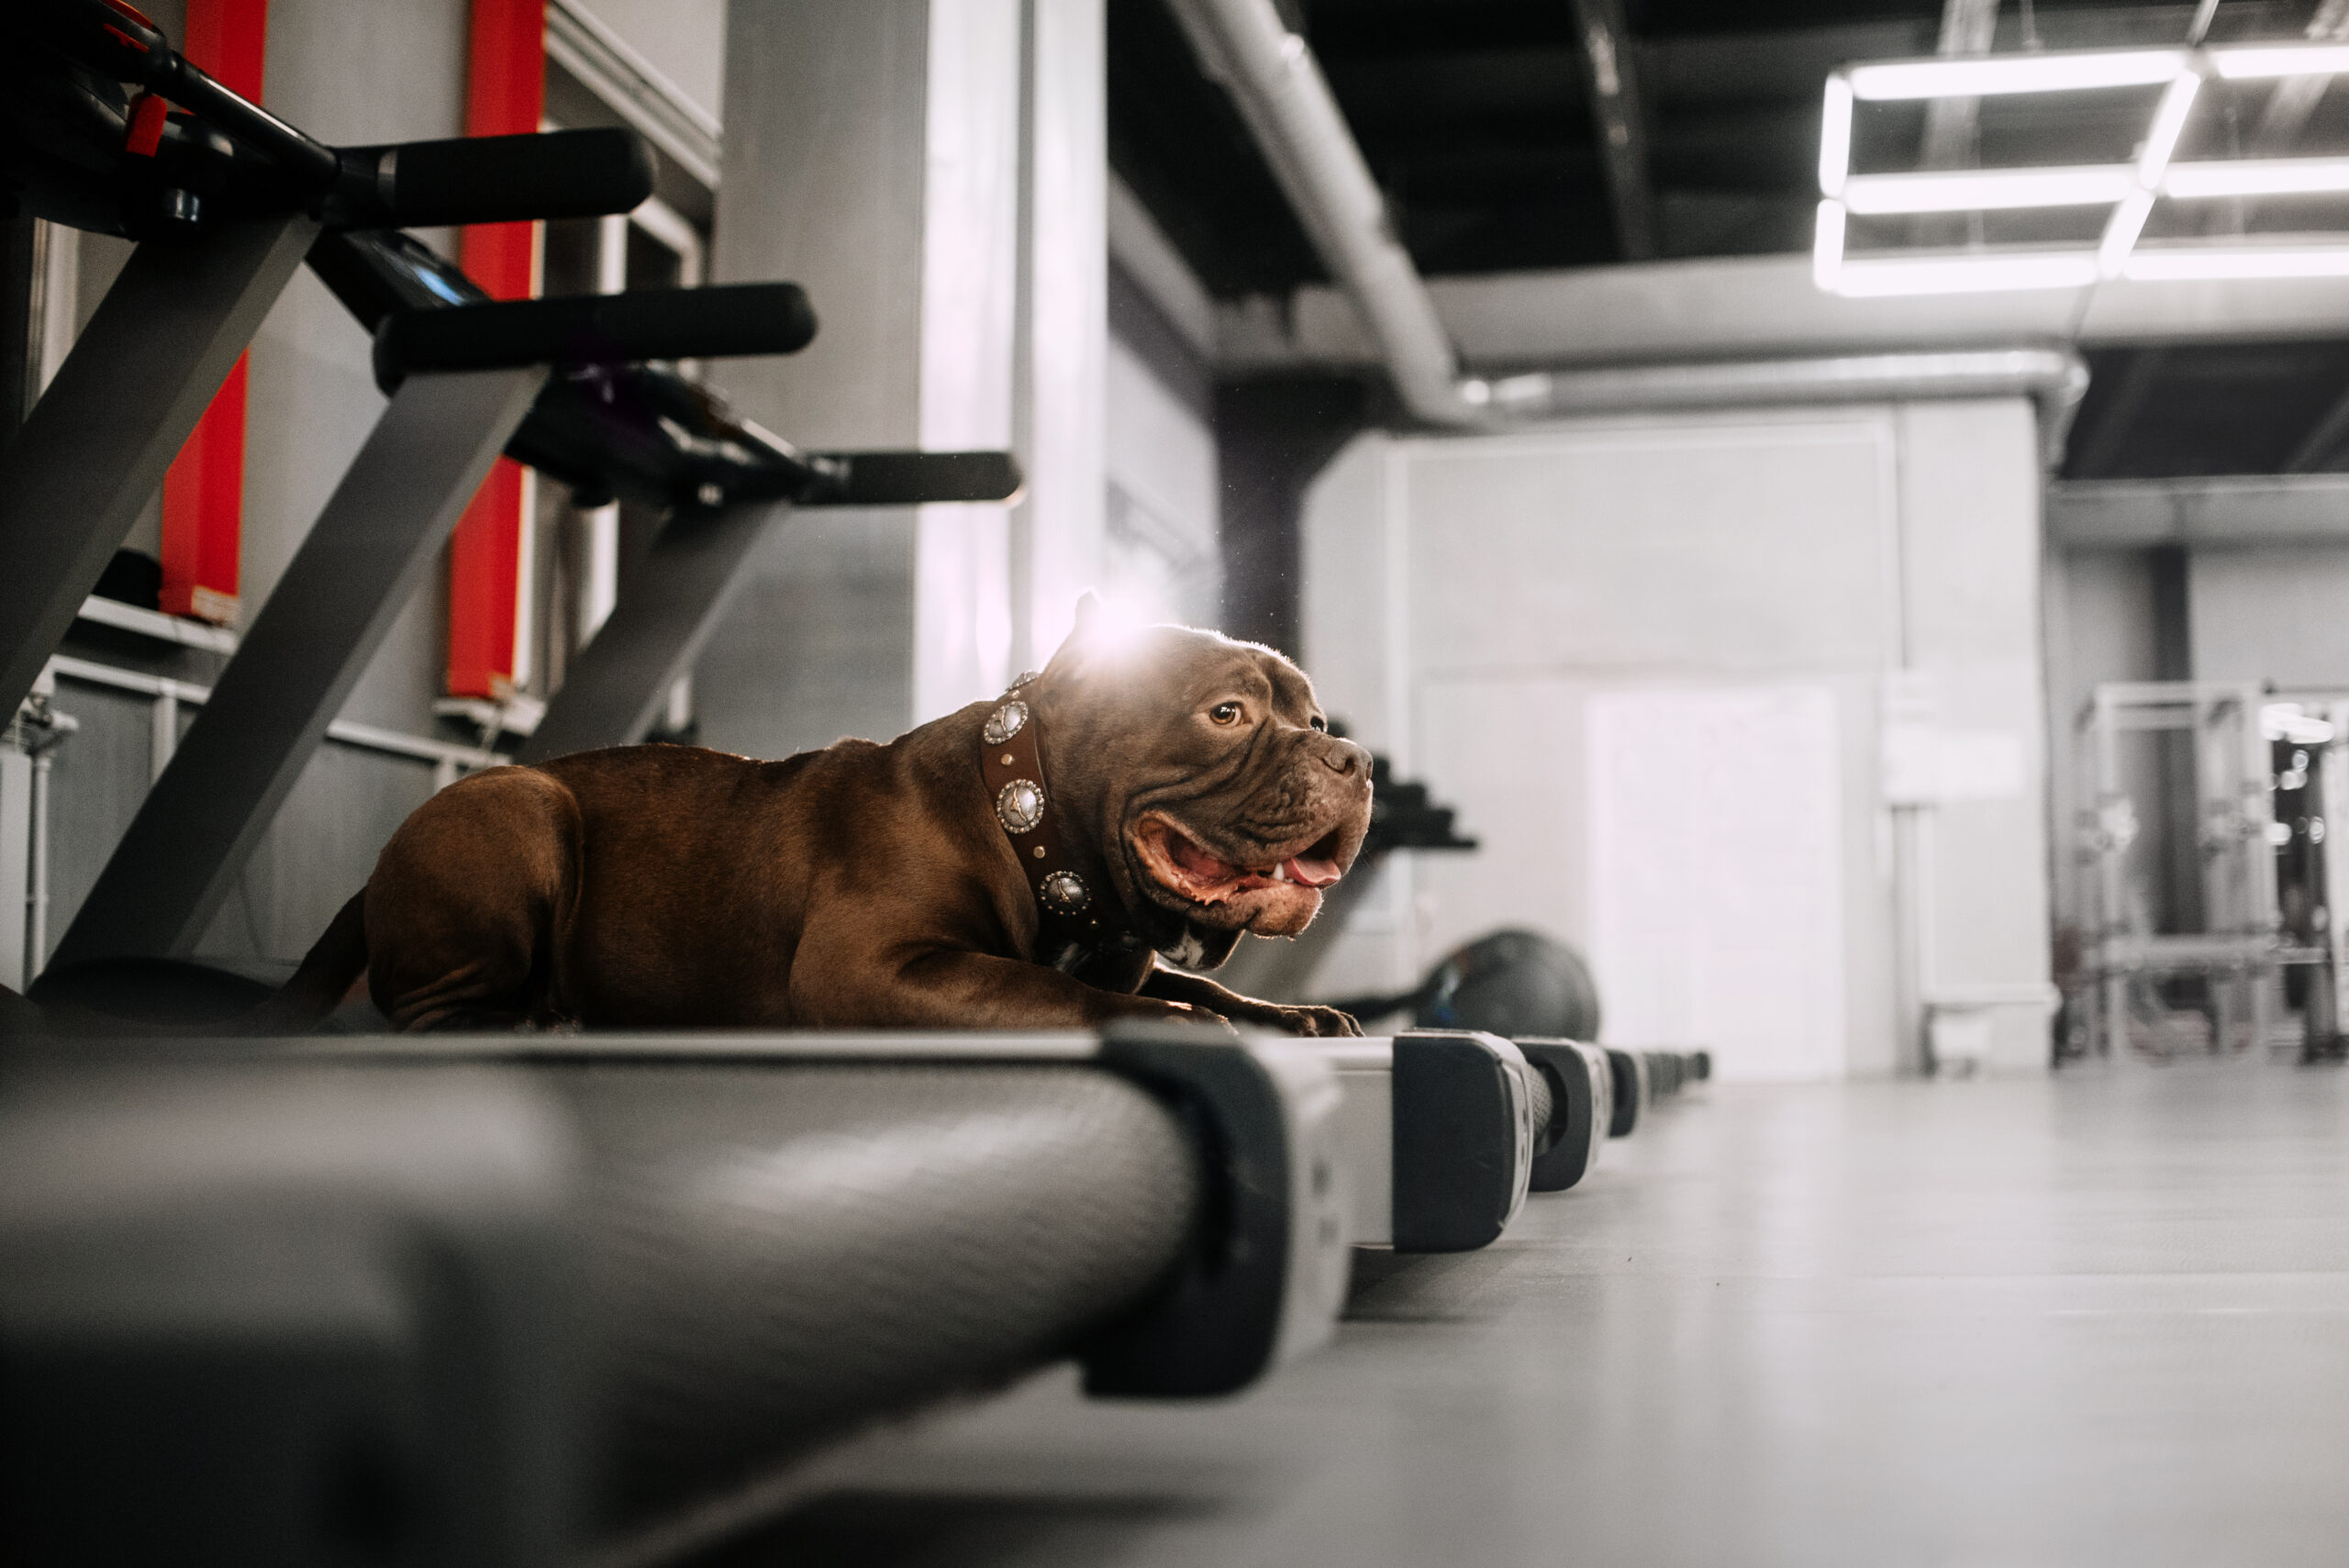 Dog Treadmill - Why would a dog need a treadmill?